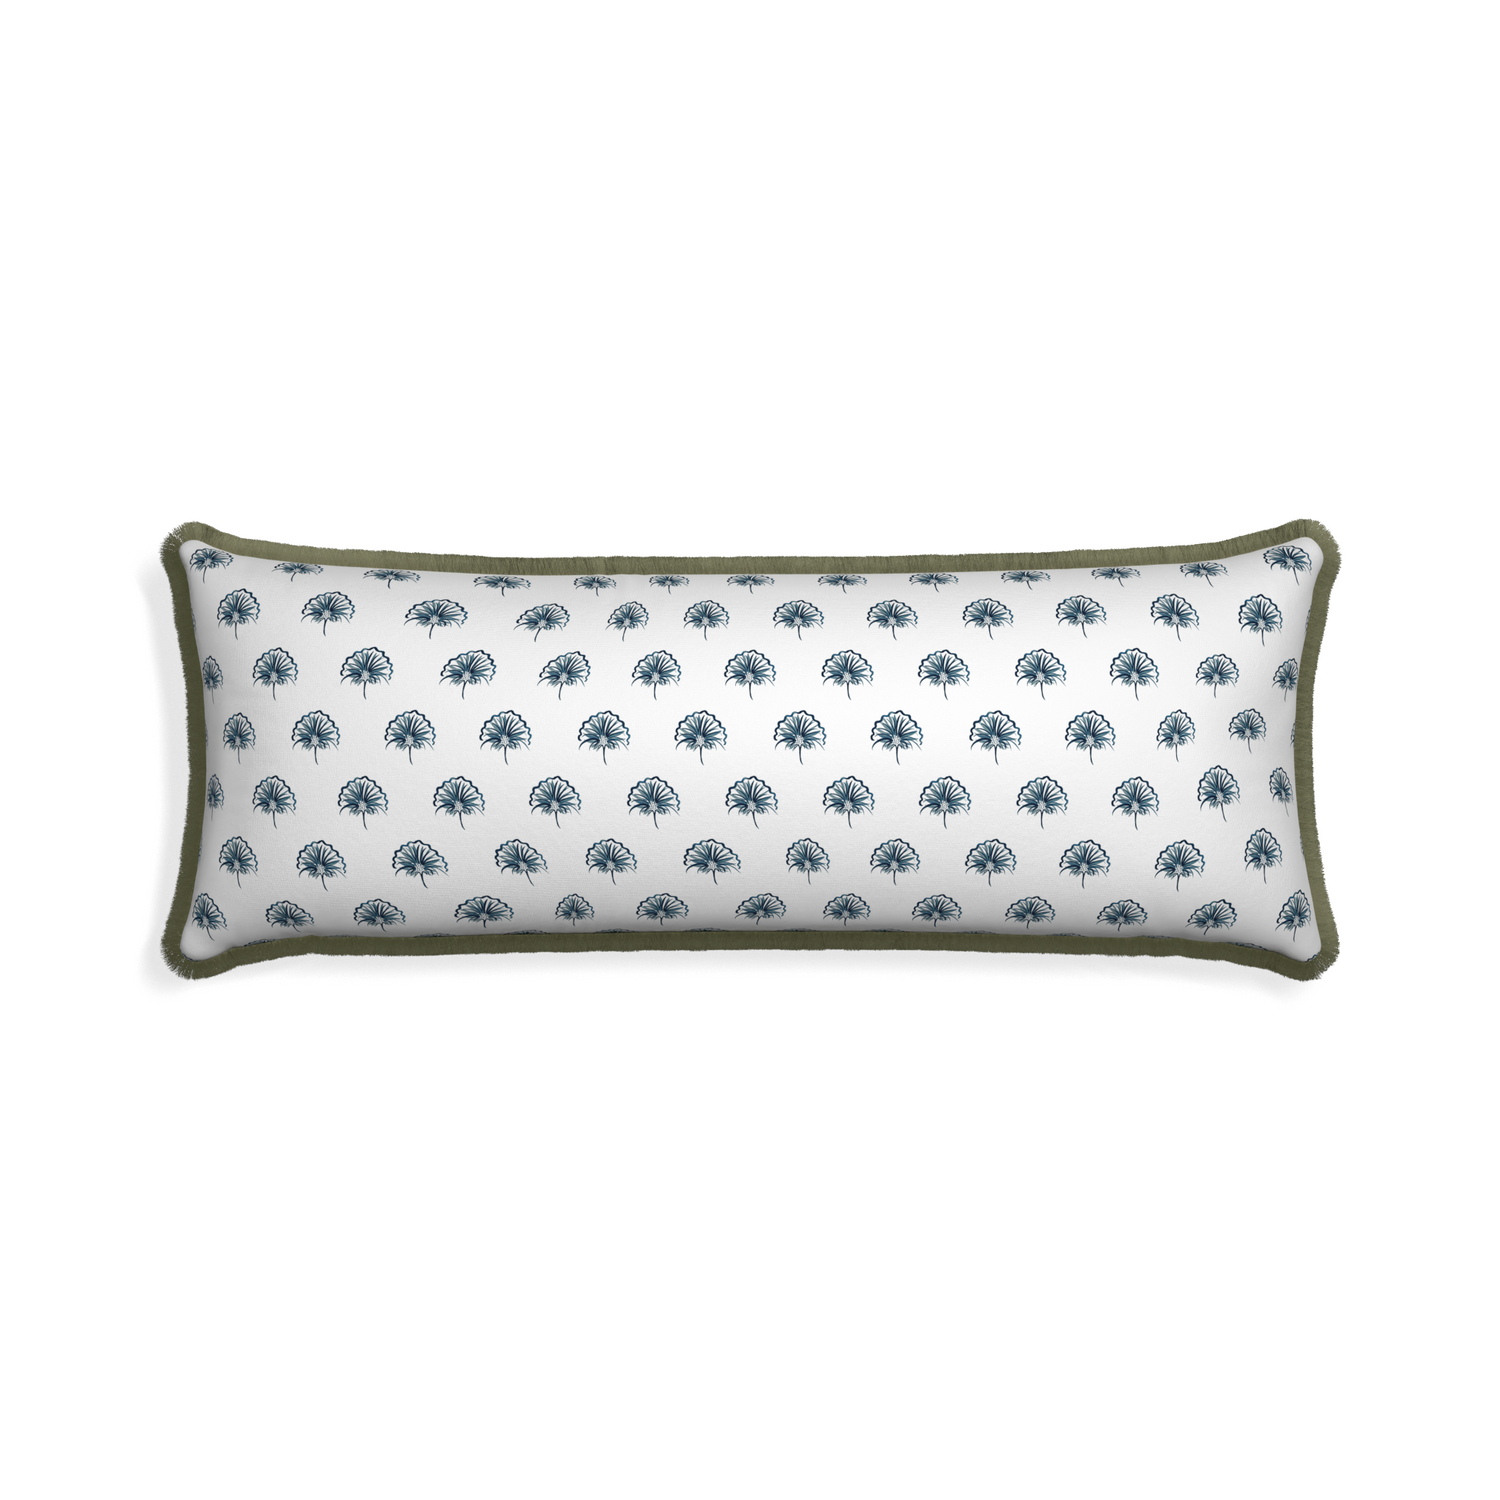 Xl-lumbar penelope midnight custom pillow with sage fringe on white background